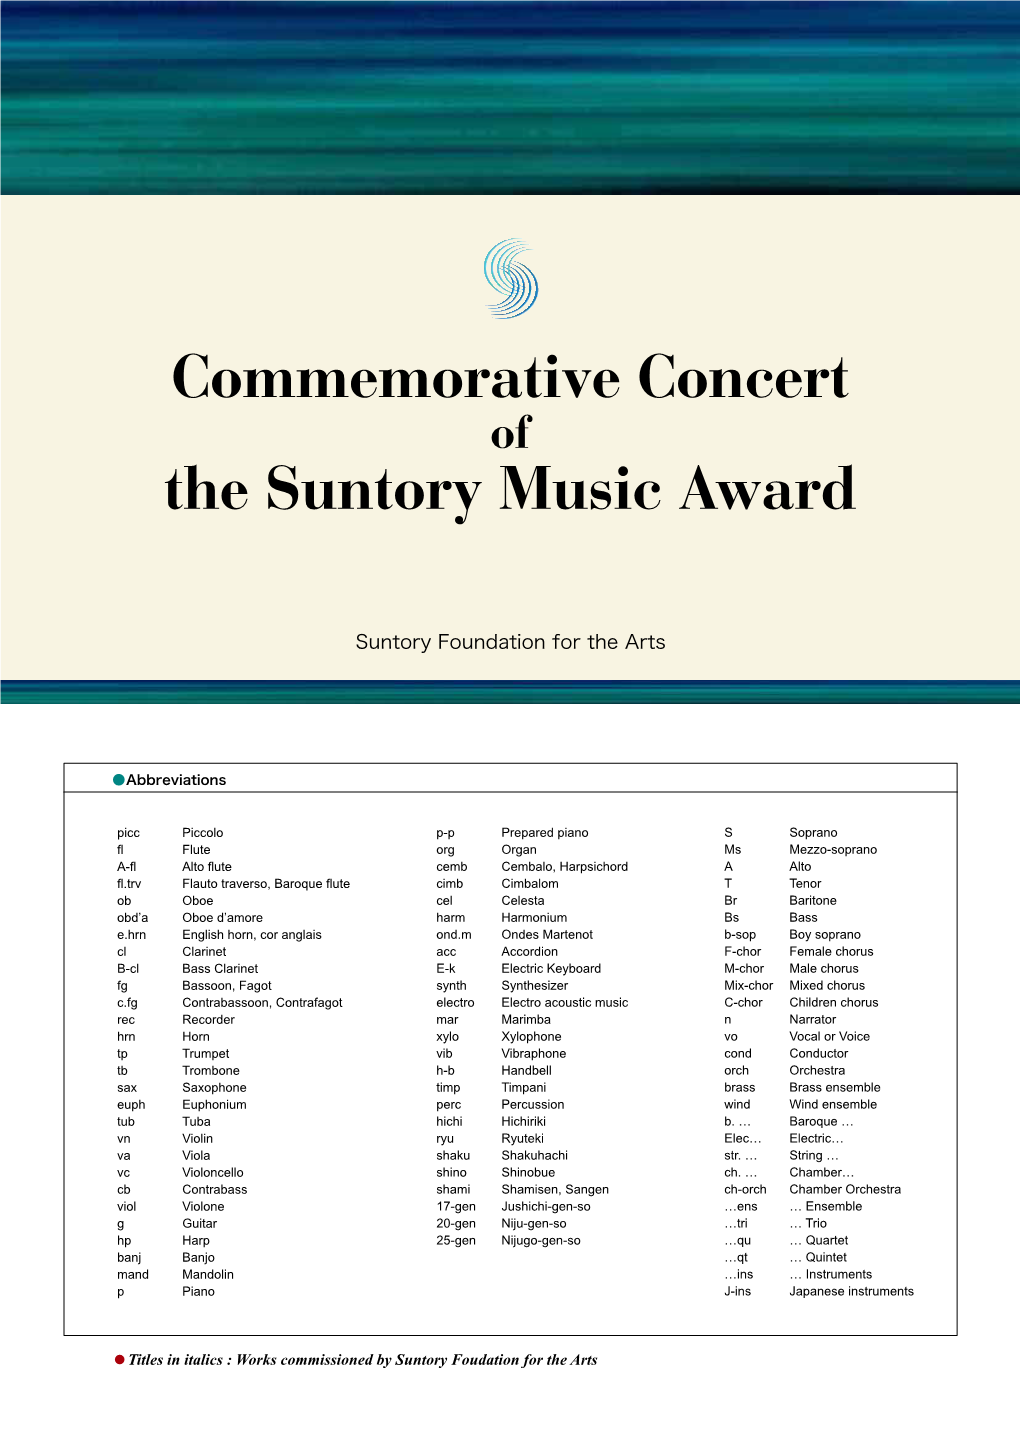 Commemorative Concert of the Suntory Music Award